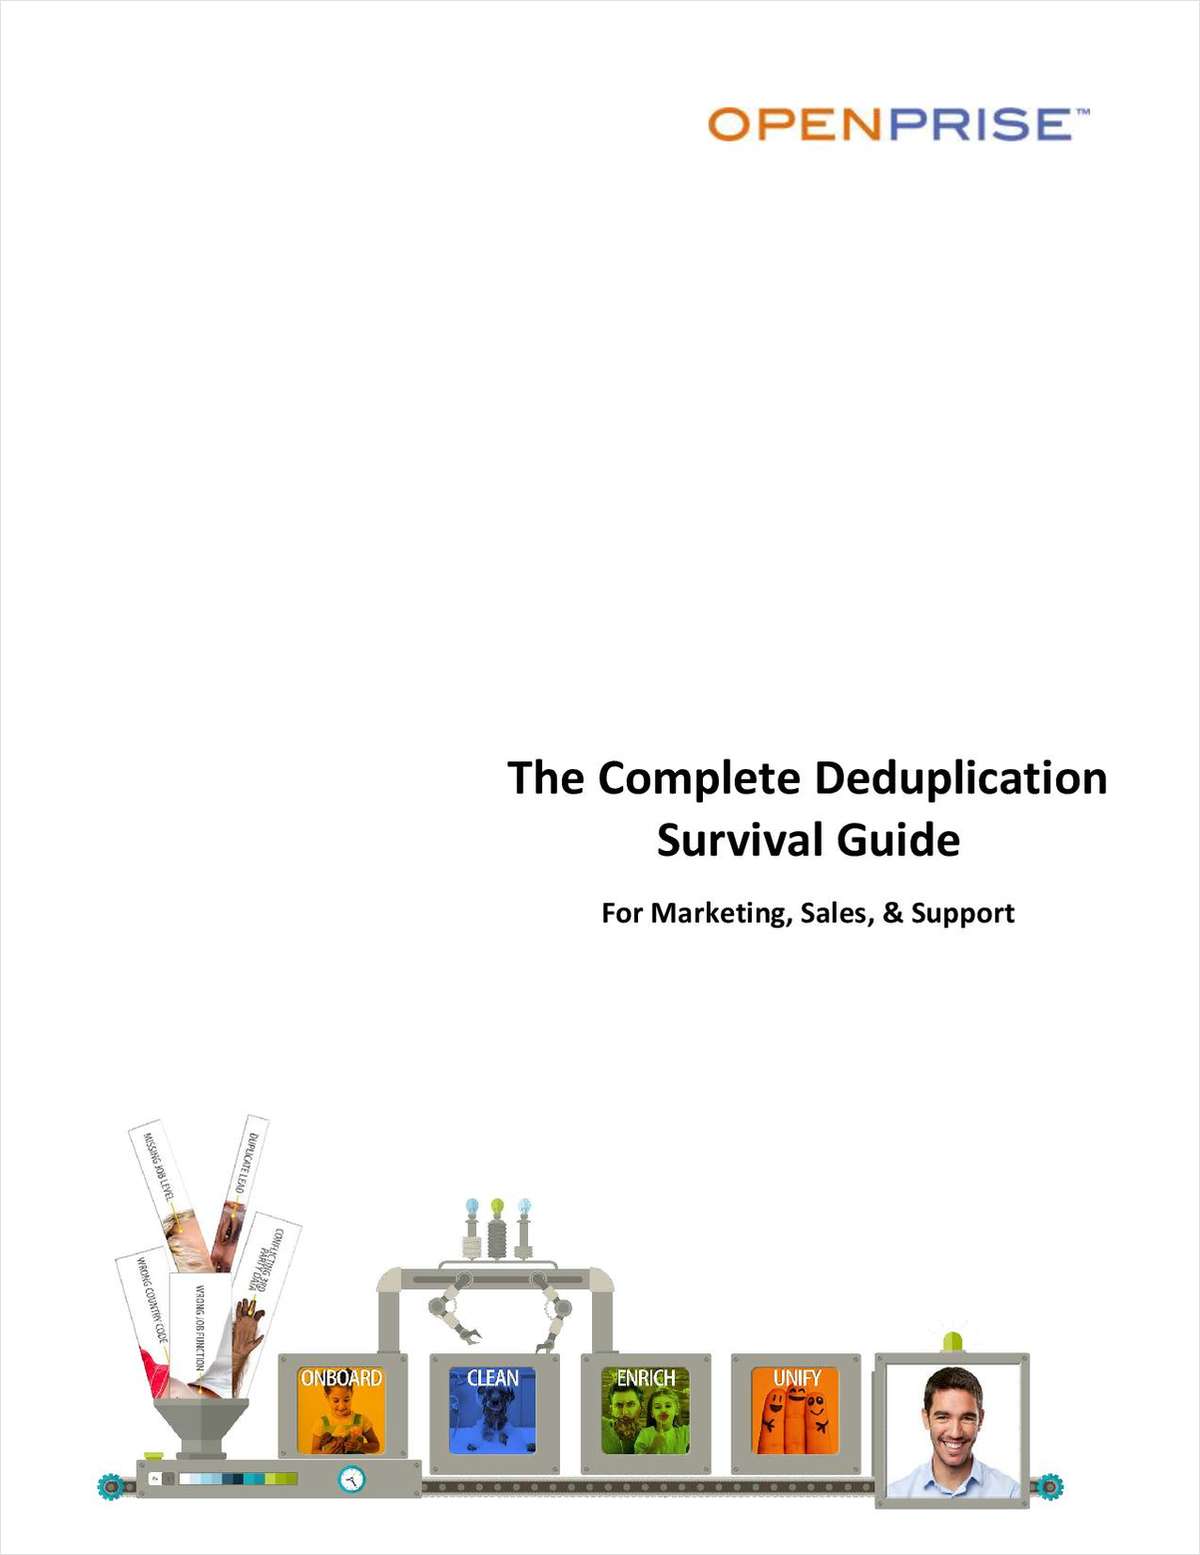 The Complete Deduplication Survival Guide